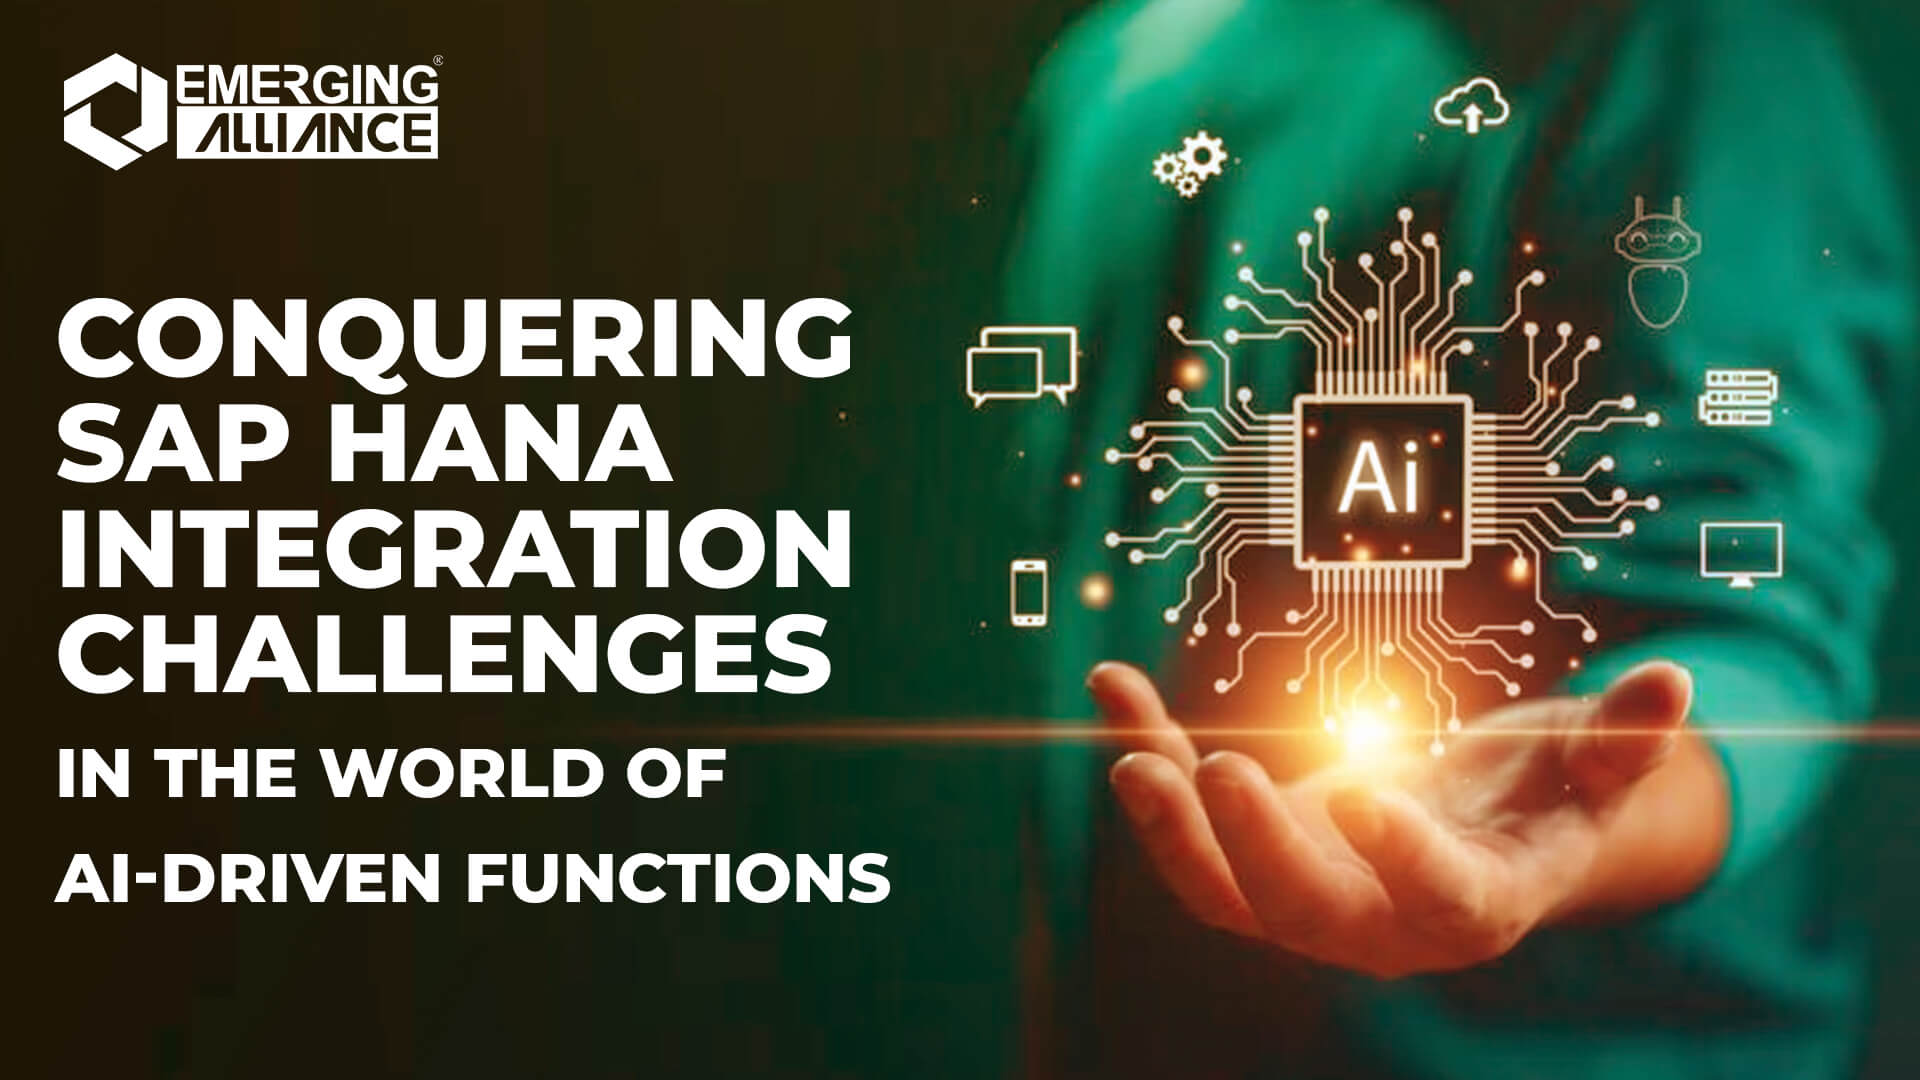 SAP HANA Integration Challenges for AI Driven Functions